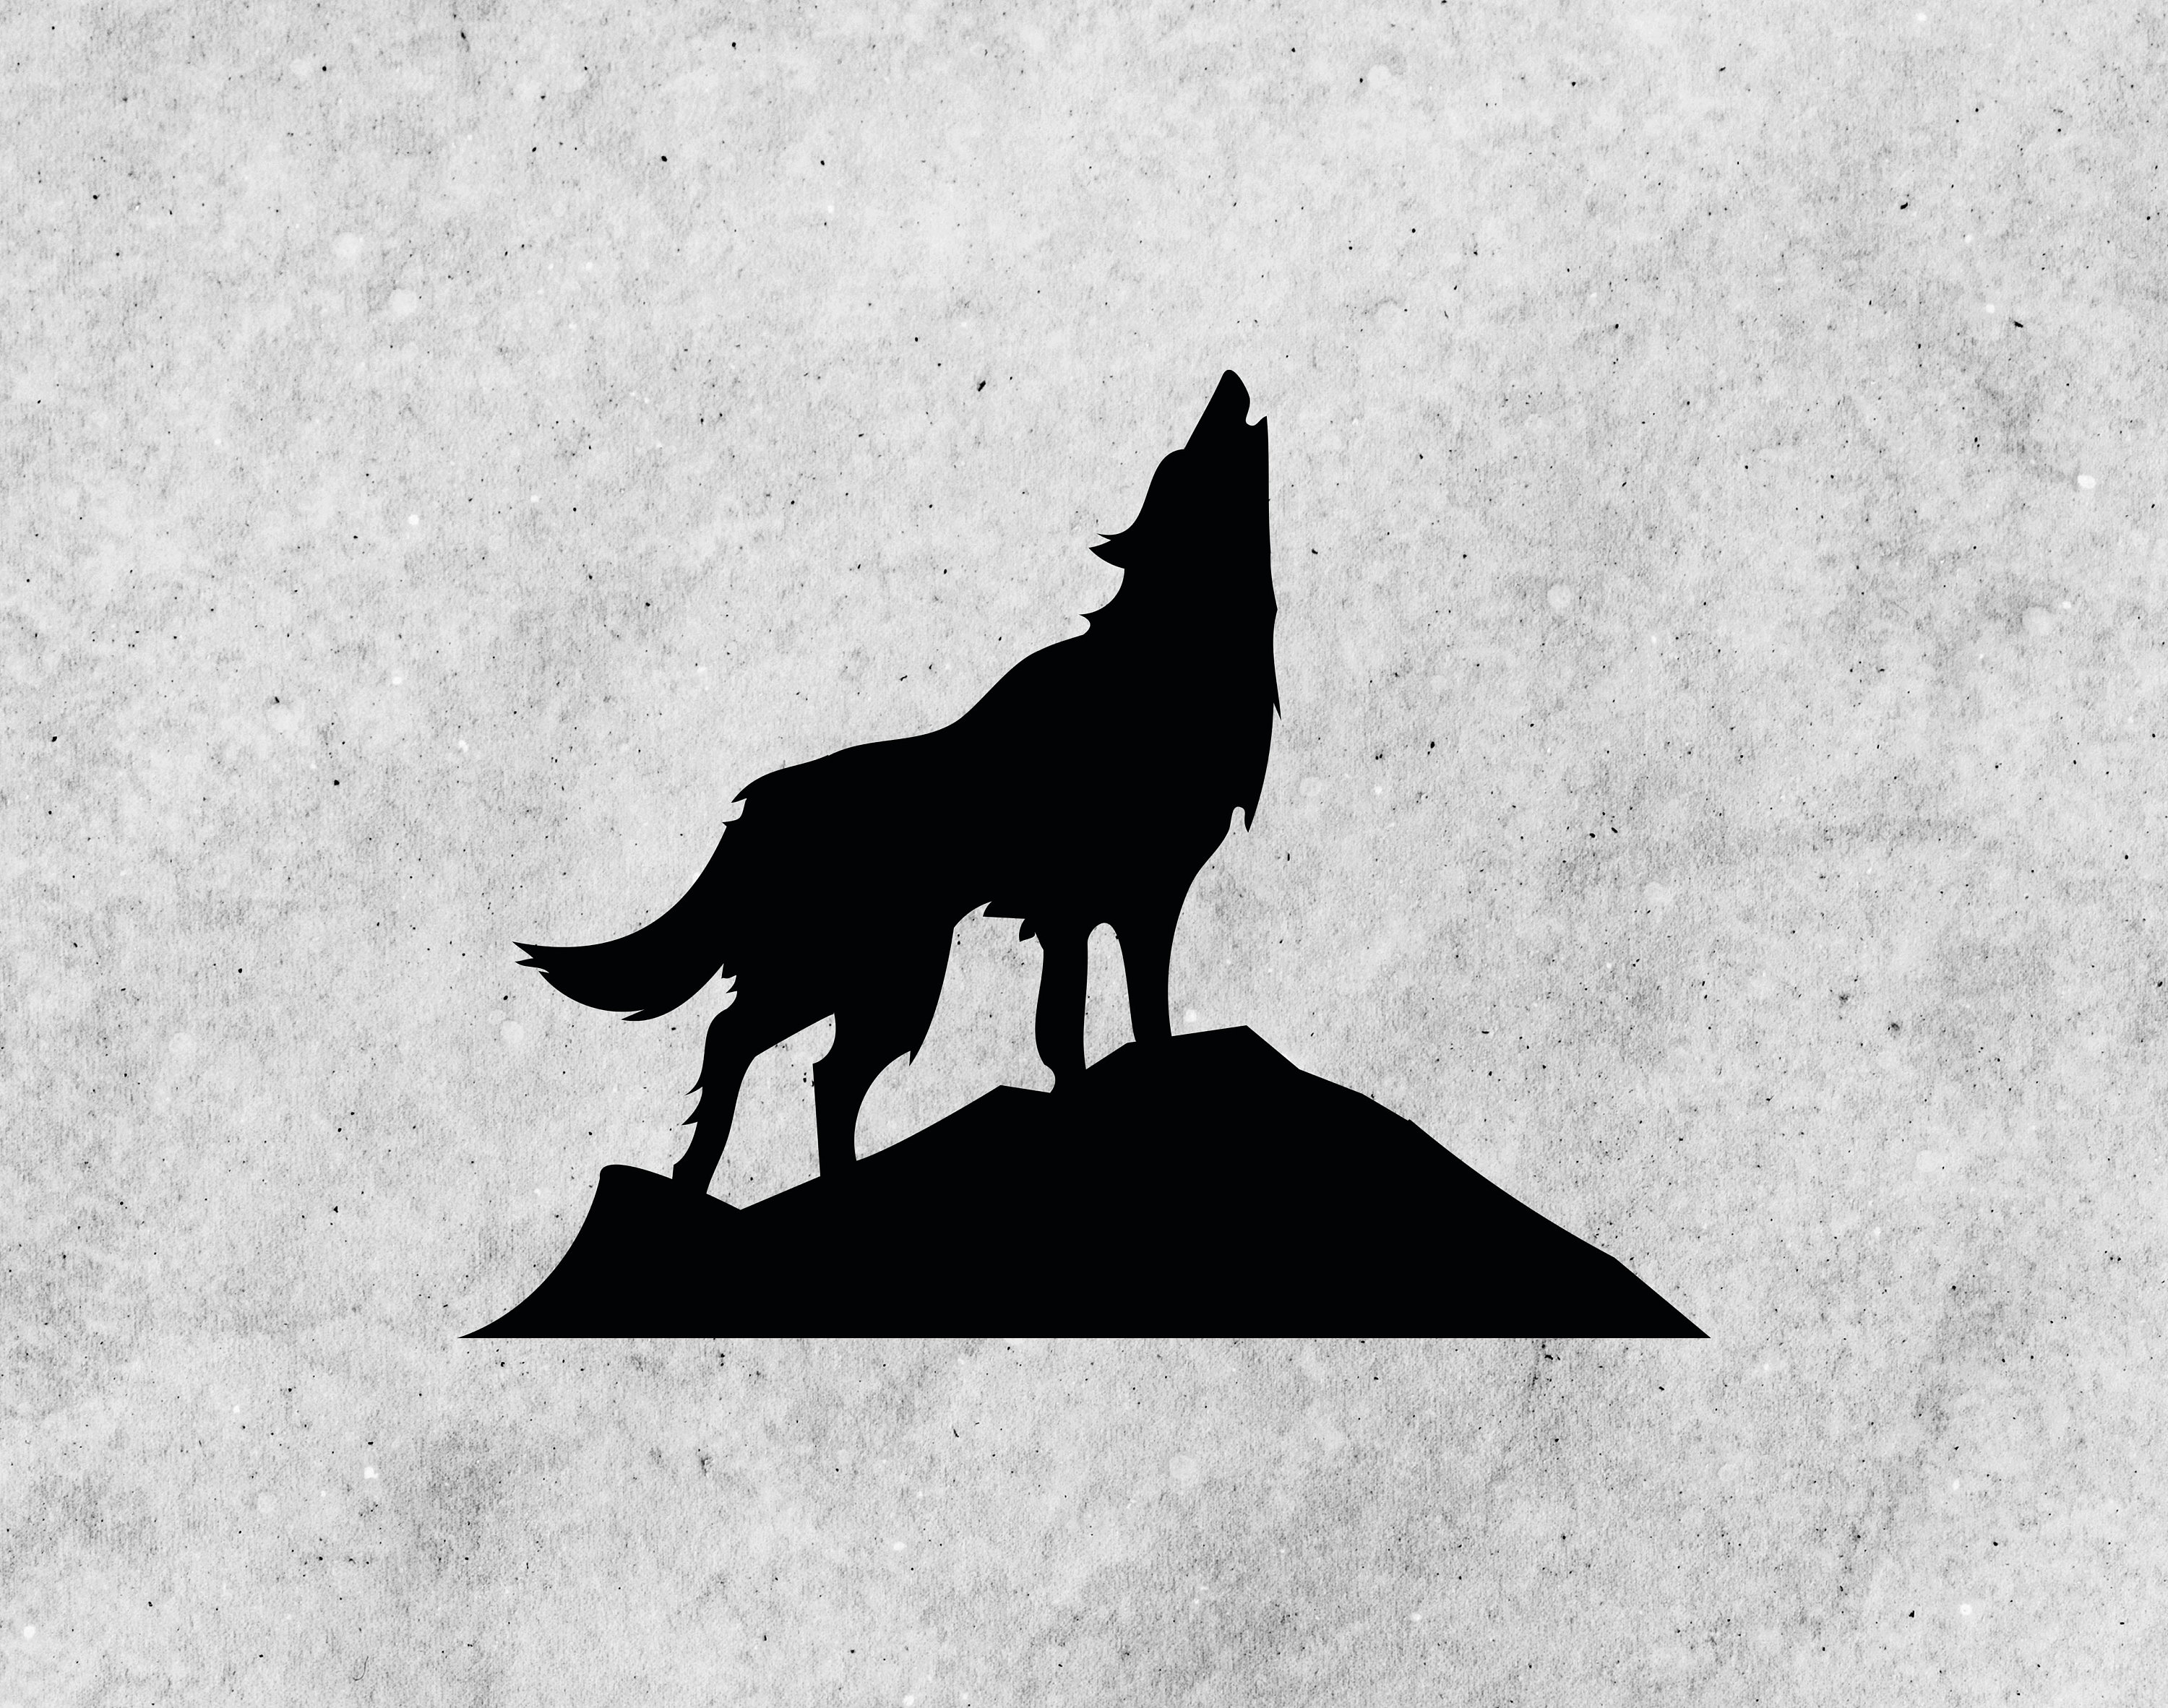 howling wolf express marlbhead